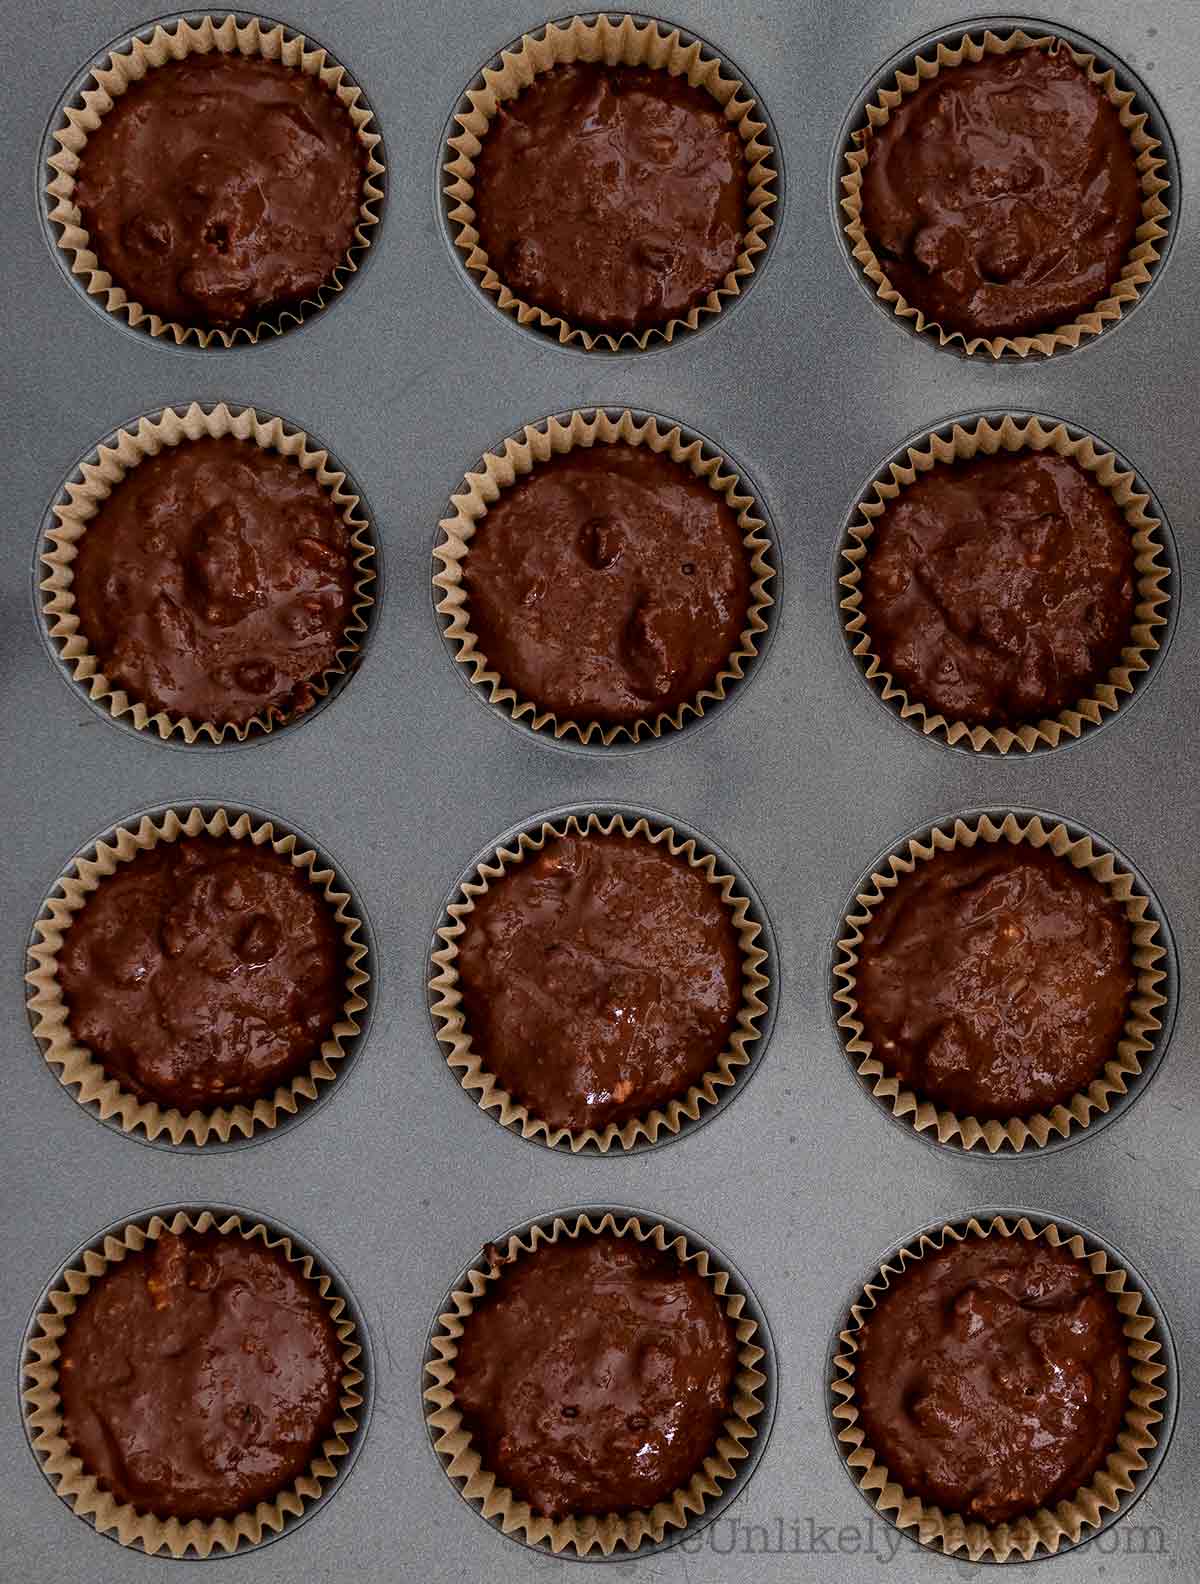 Chocolate ricotta muffin batter in pan